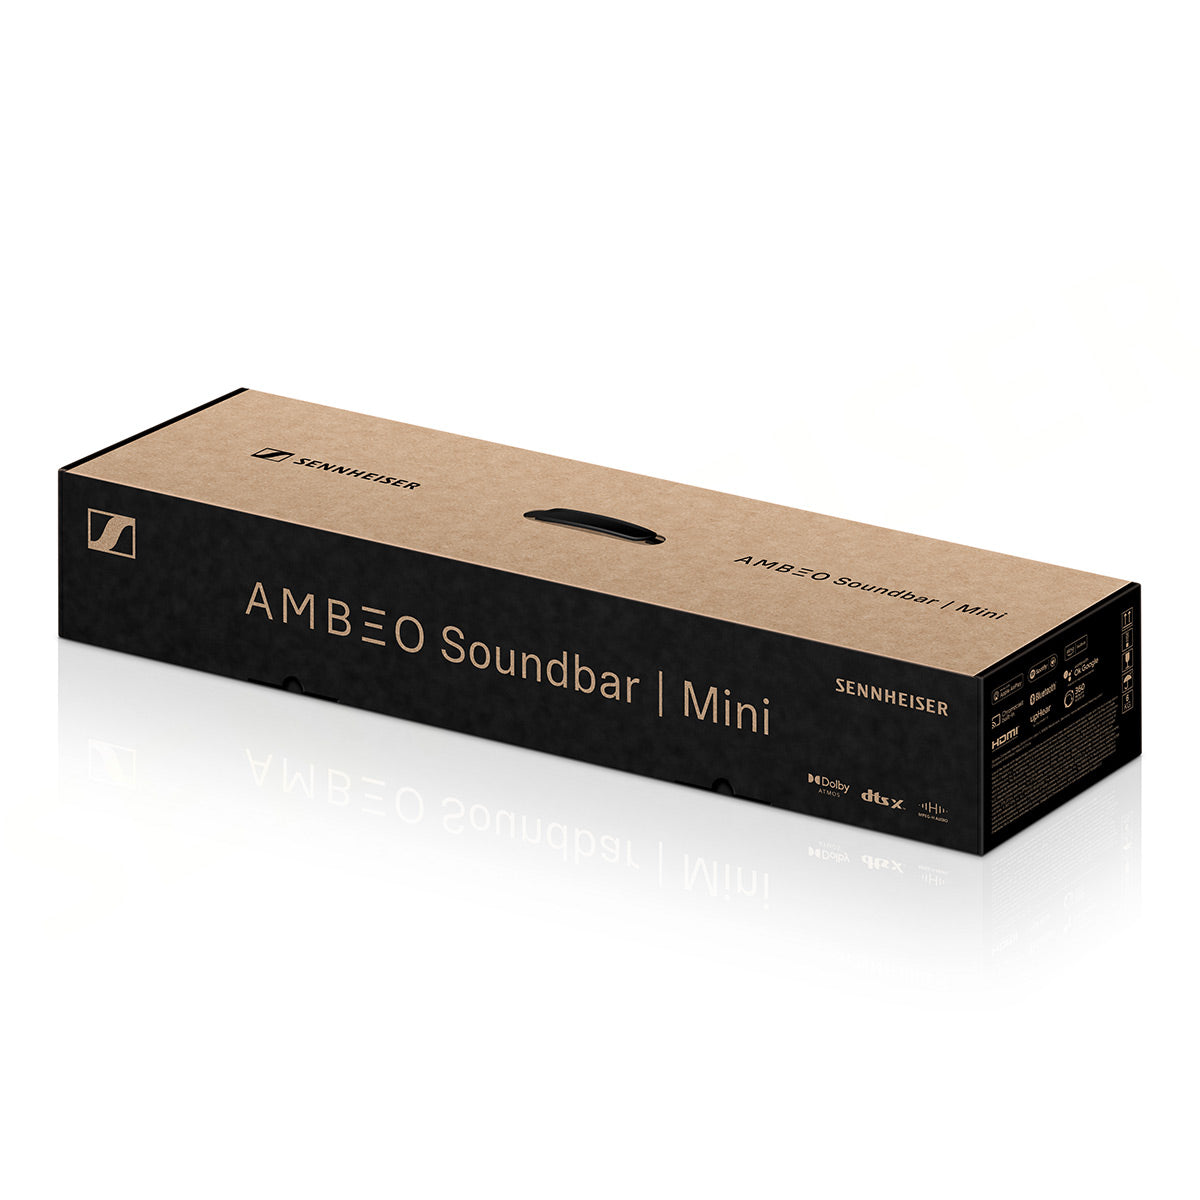 Sennheiser AMBEO Soundbar Mini 7.1.4 Channel Soundbar with Dolby Atmos and DTS:X